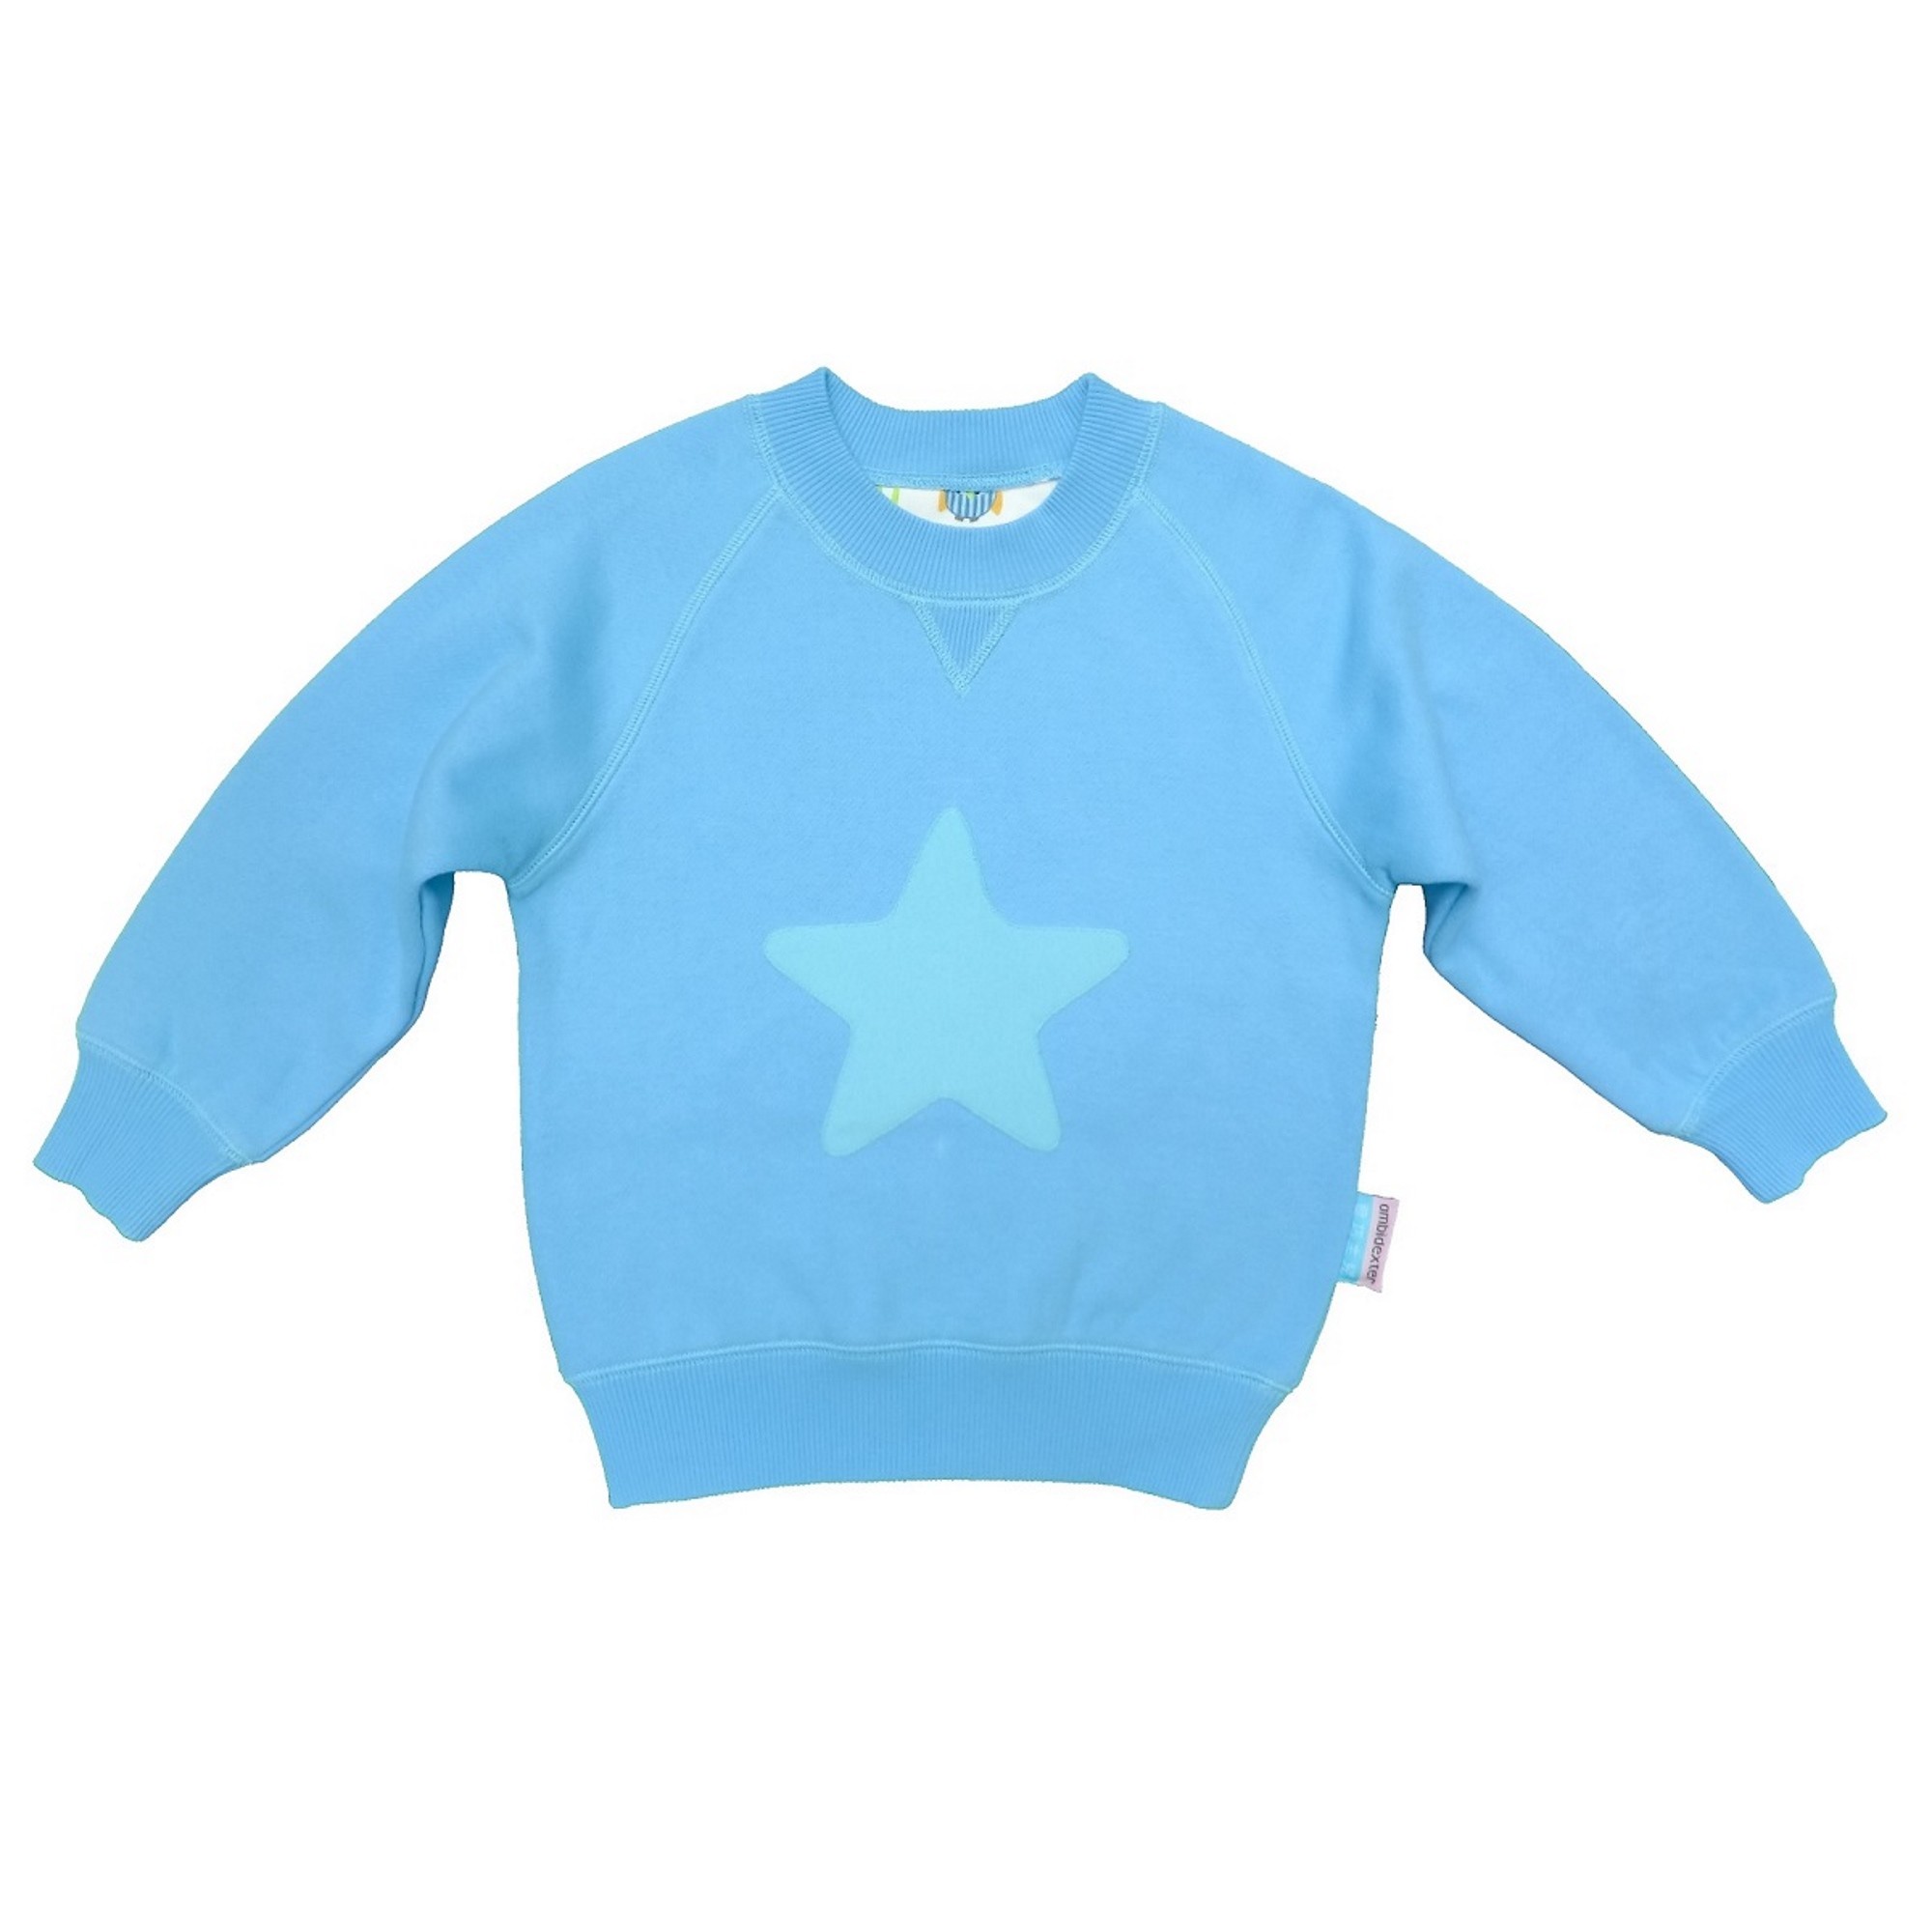 starlet fun to wear sweatshirt - FWS1726